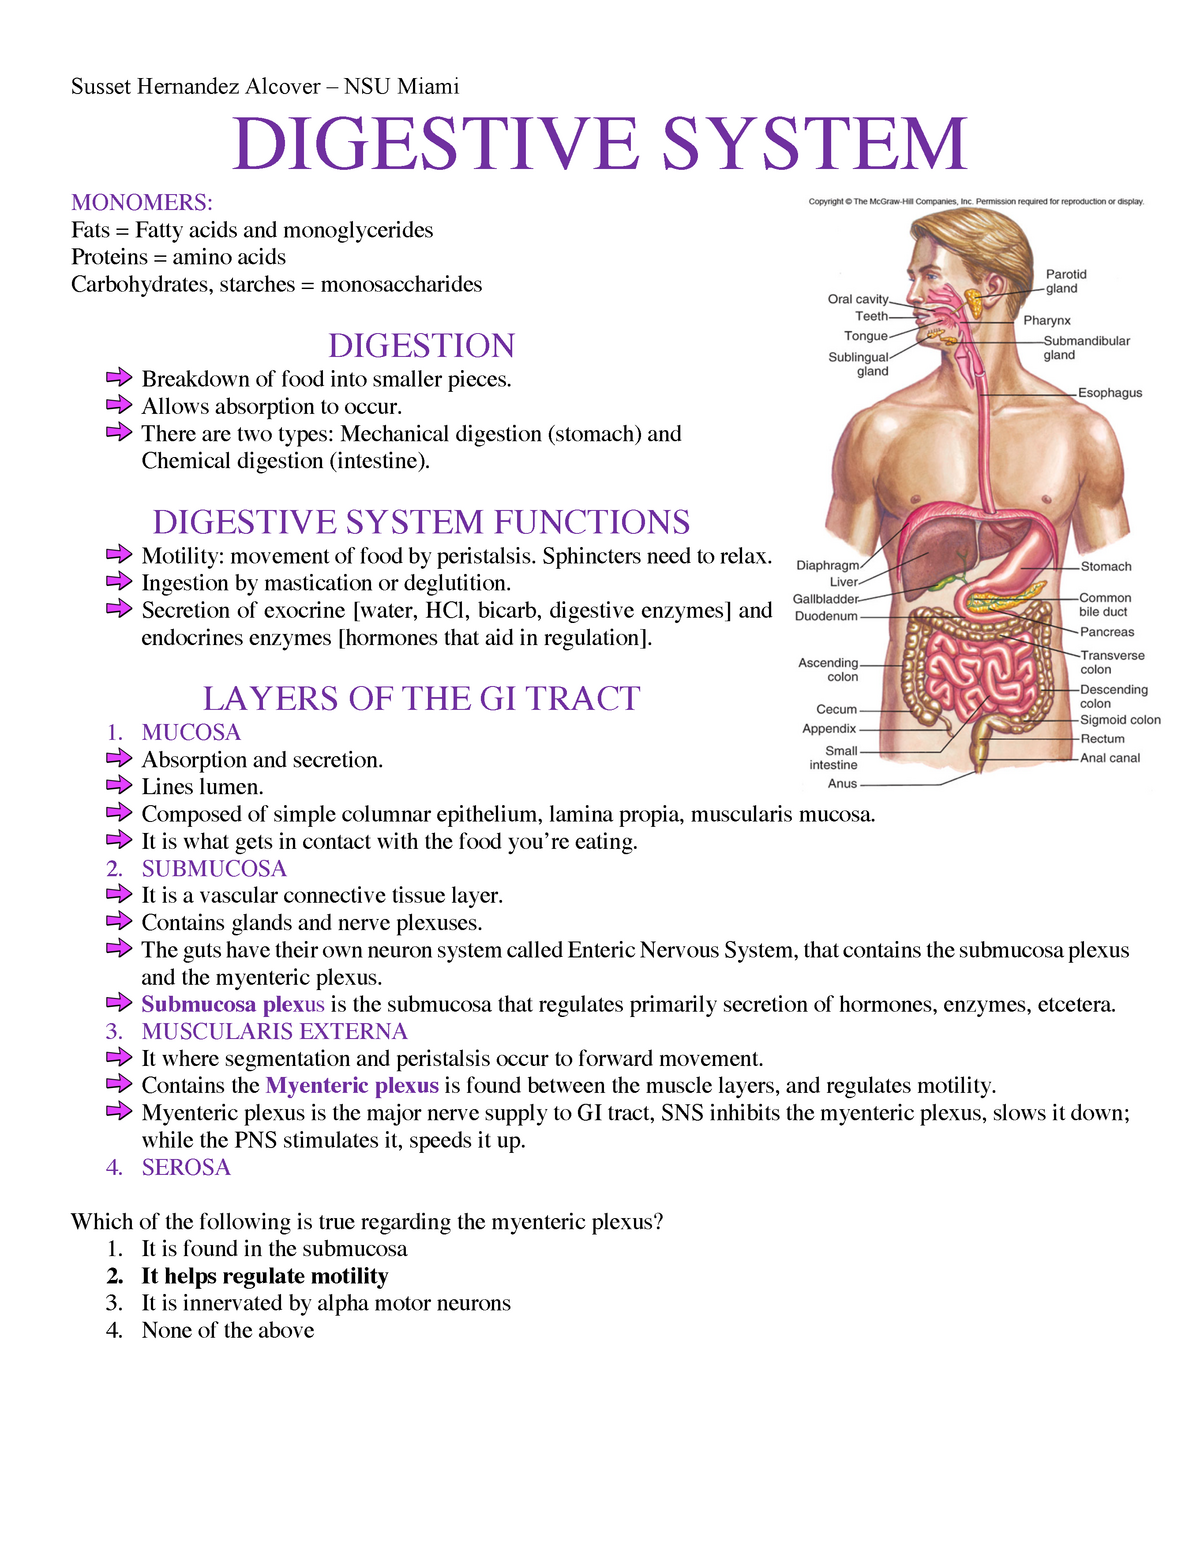 digestive-system-summary-susset-hernandez-alcover-nsu-miami-digestive